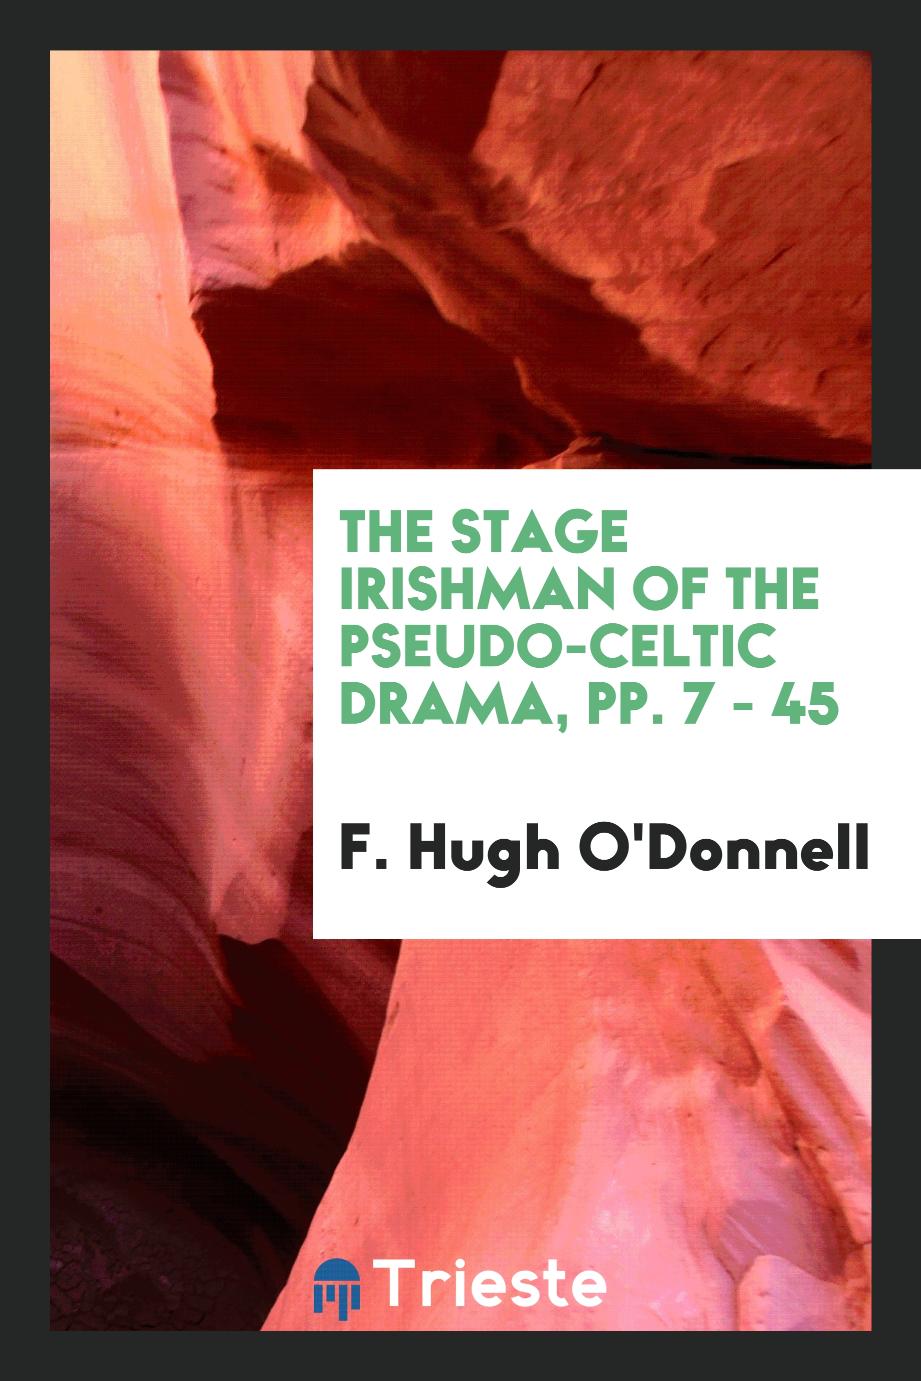 The Stage Irishman of the Pseudo-Celtic Drama, pp. 7 - 45